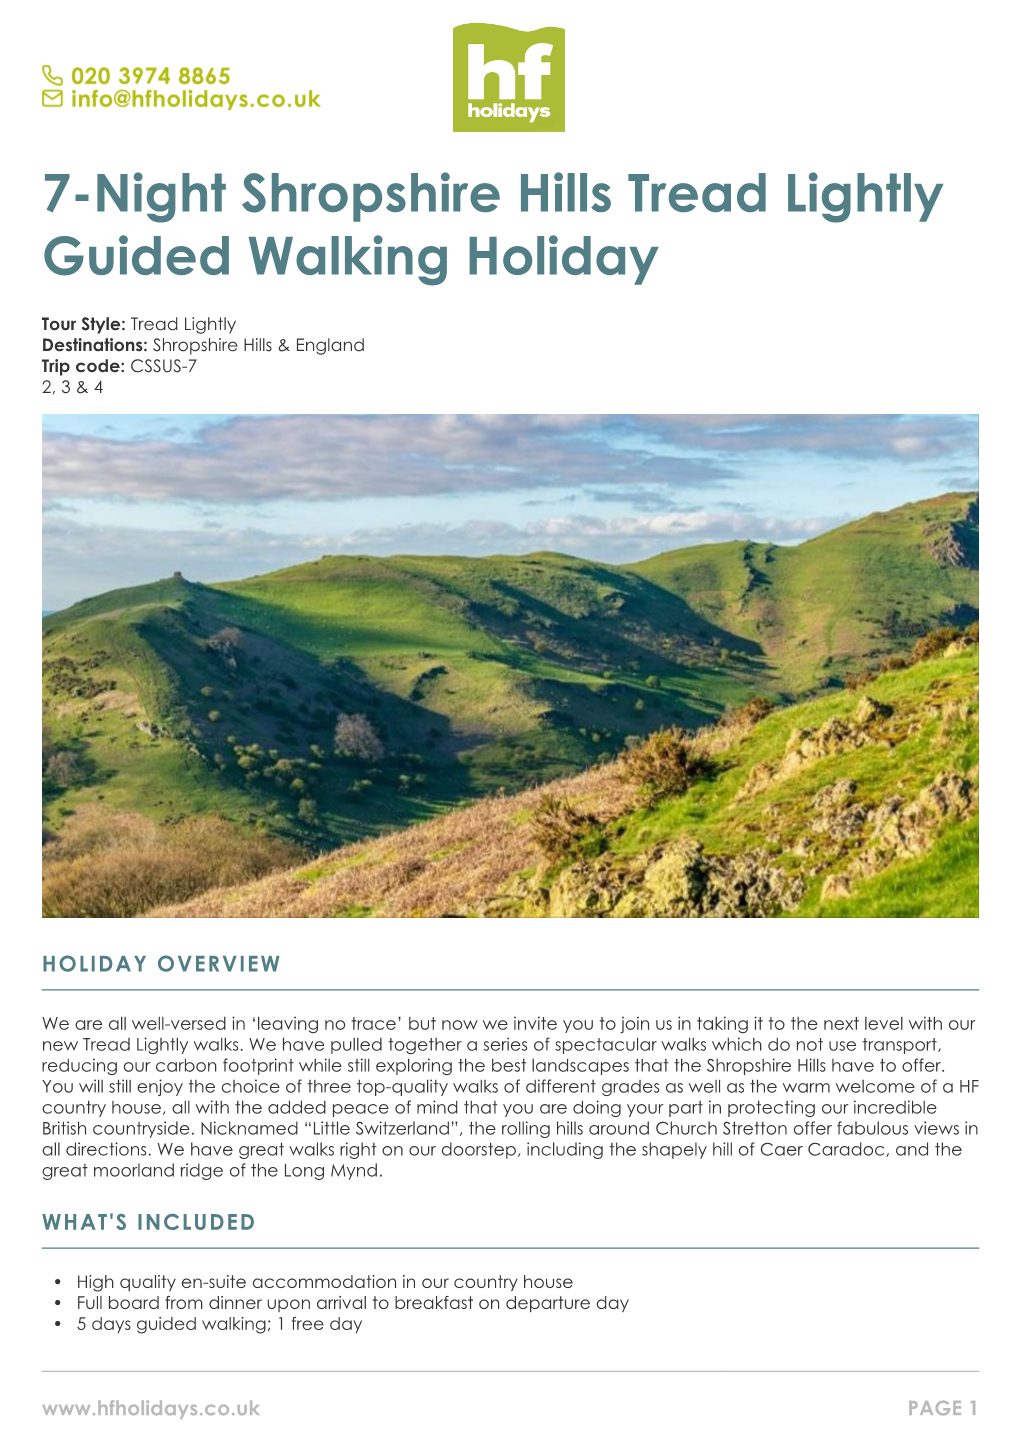 7-Night Shropshire Hills Tread Lightly Guided Walking Holiday